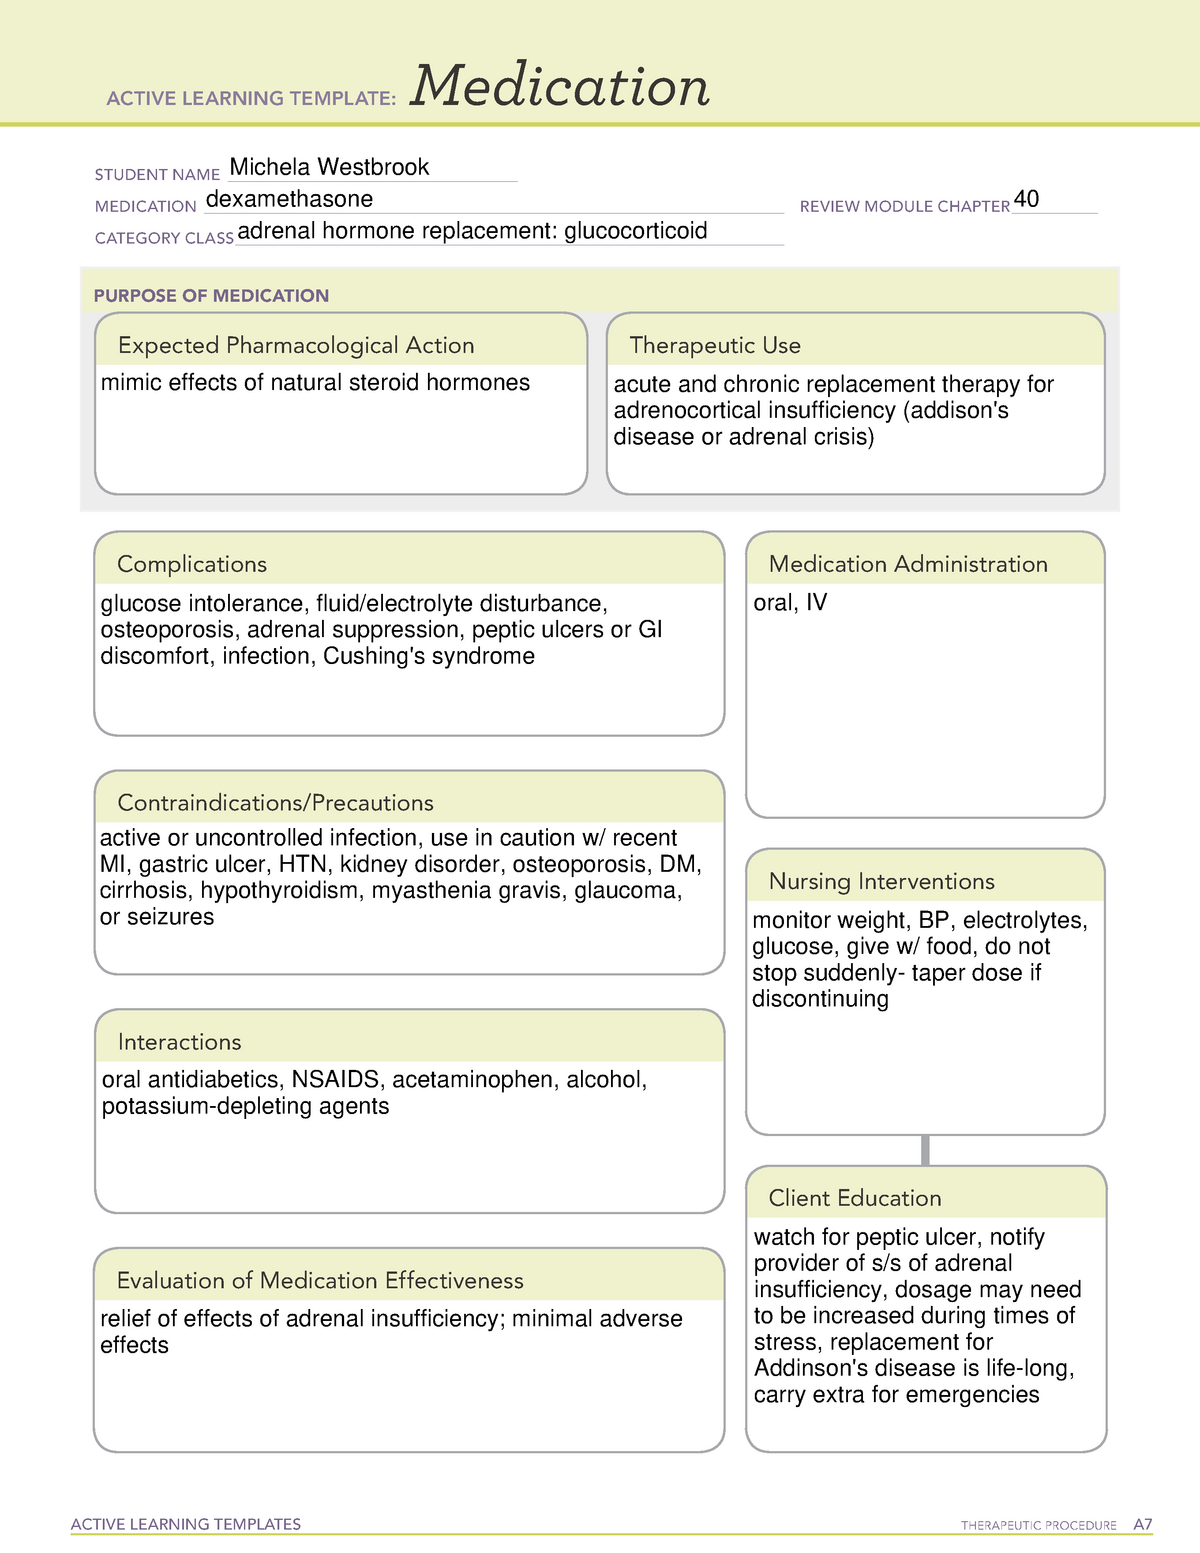 ati-medication-template-dexamethasone-active-learning-templates